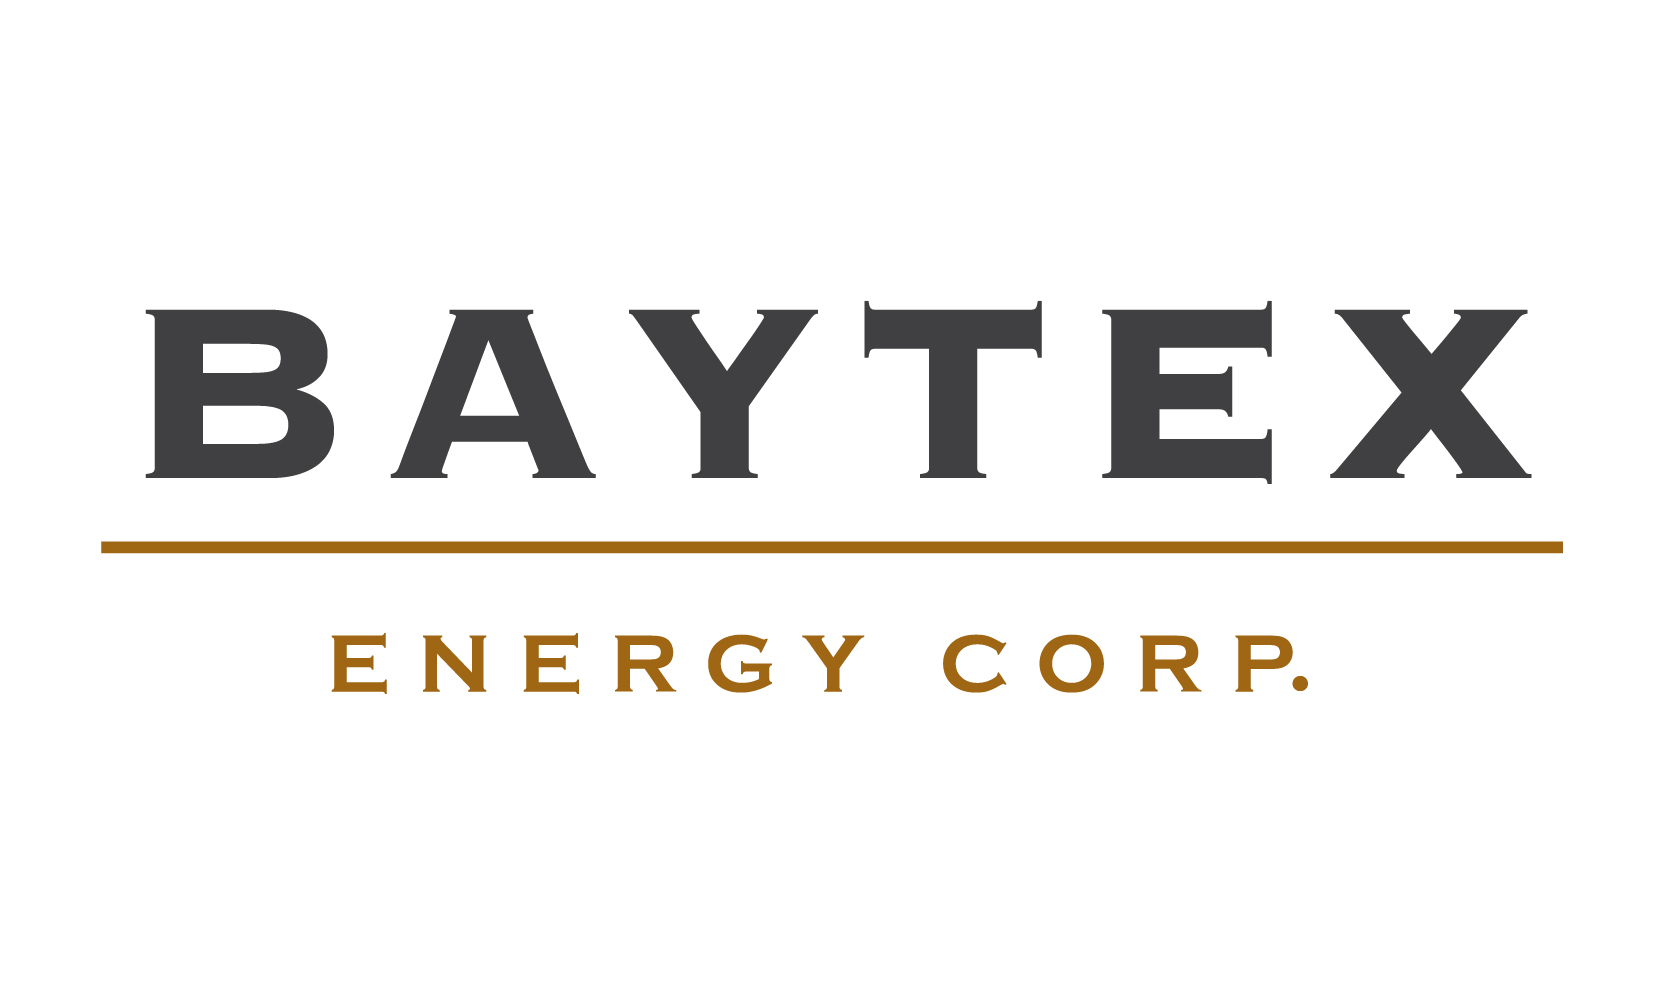 Baytex Energy Corp